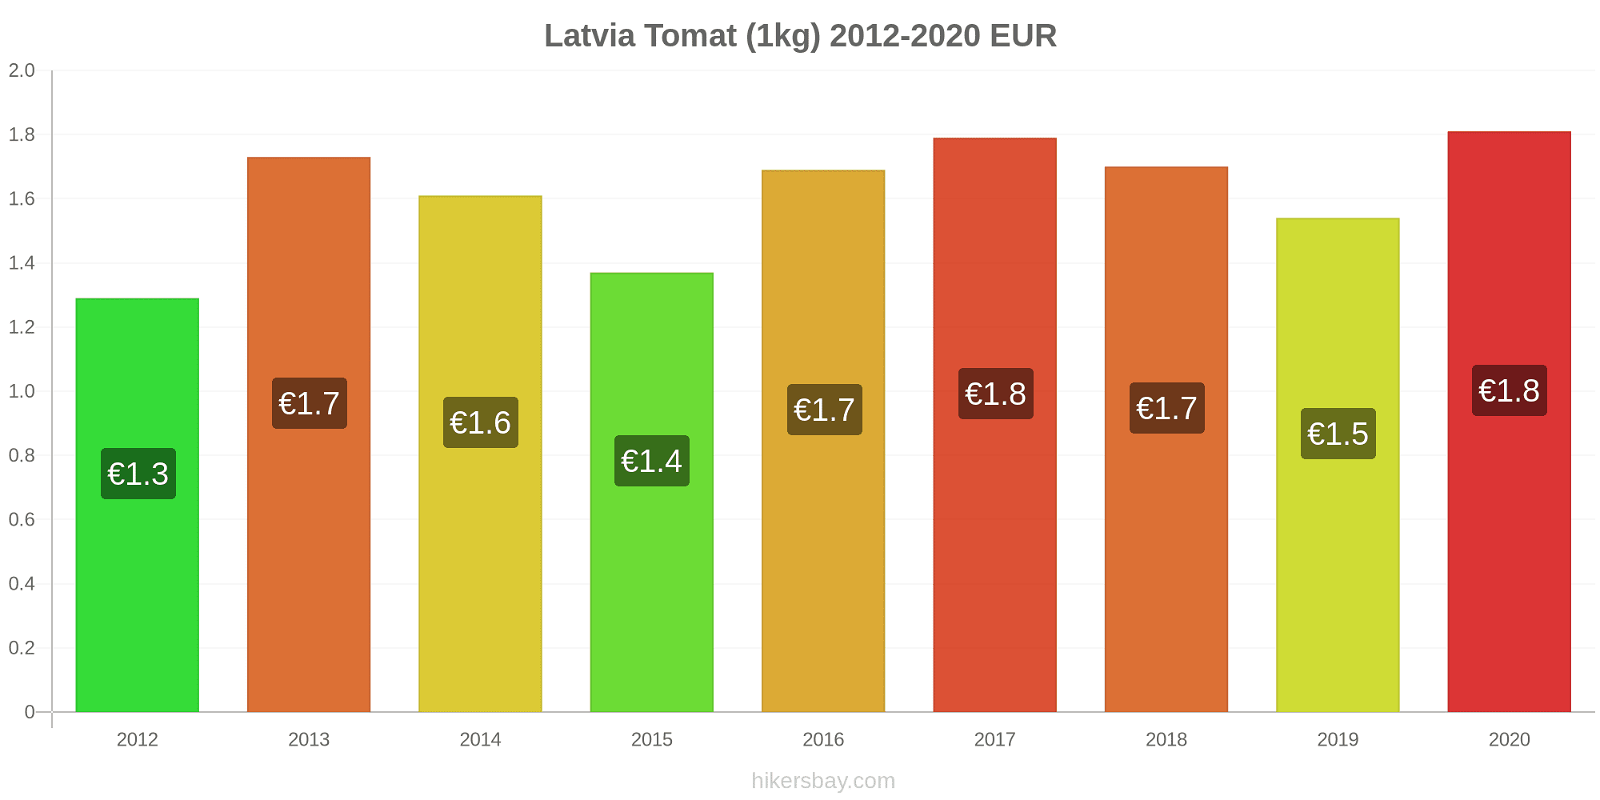 Latvia prisendringer Tomat (1kg) hikersbay.com